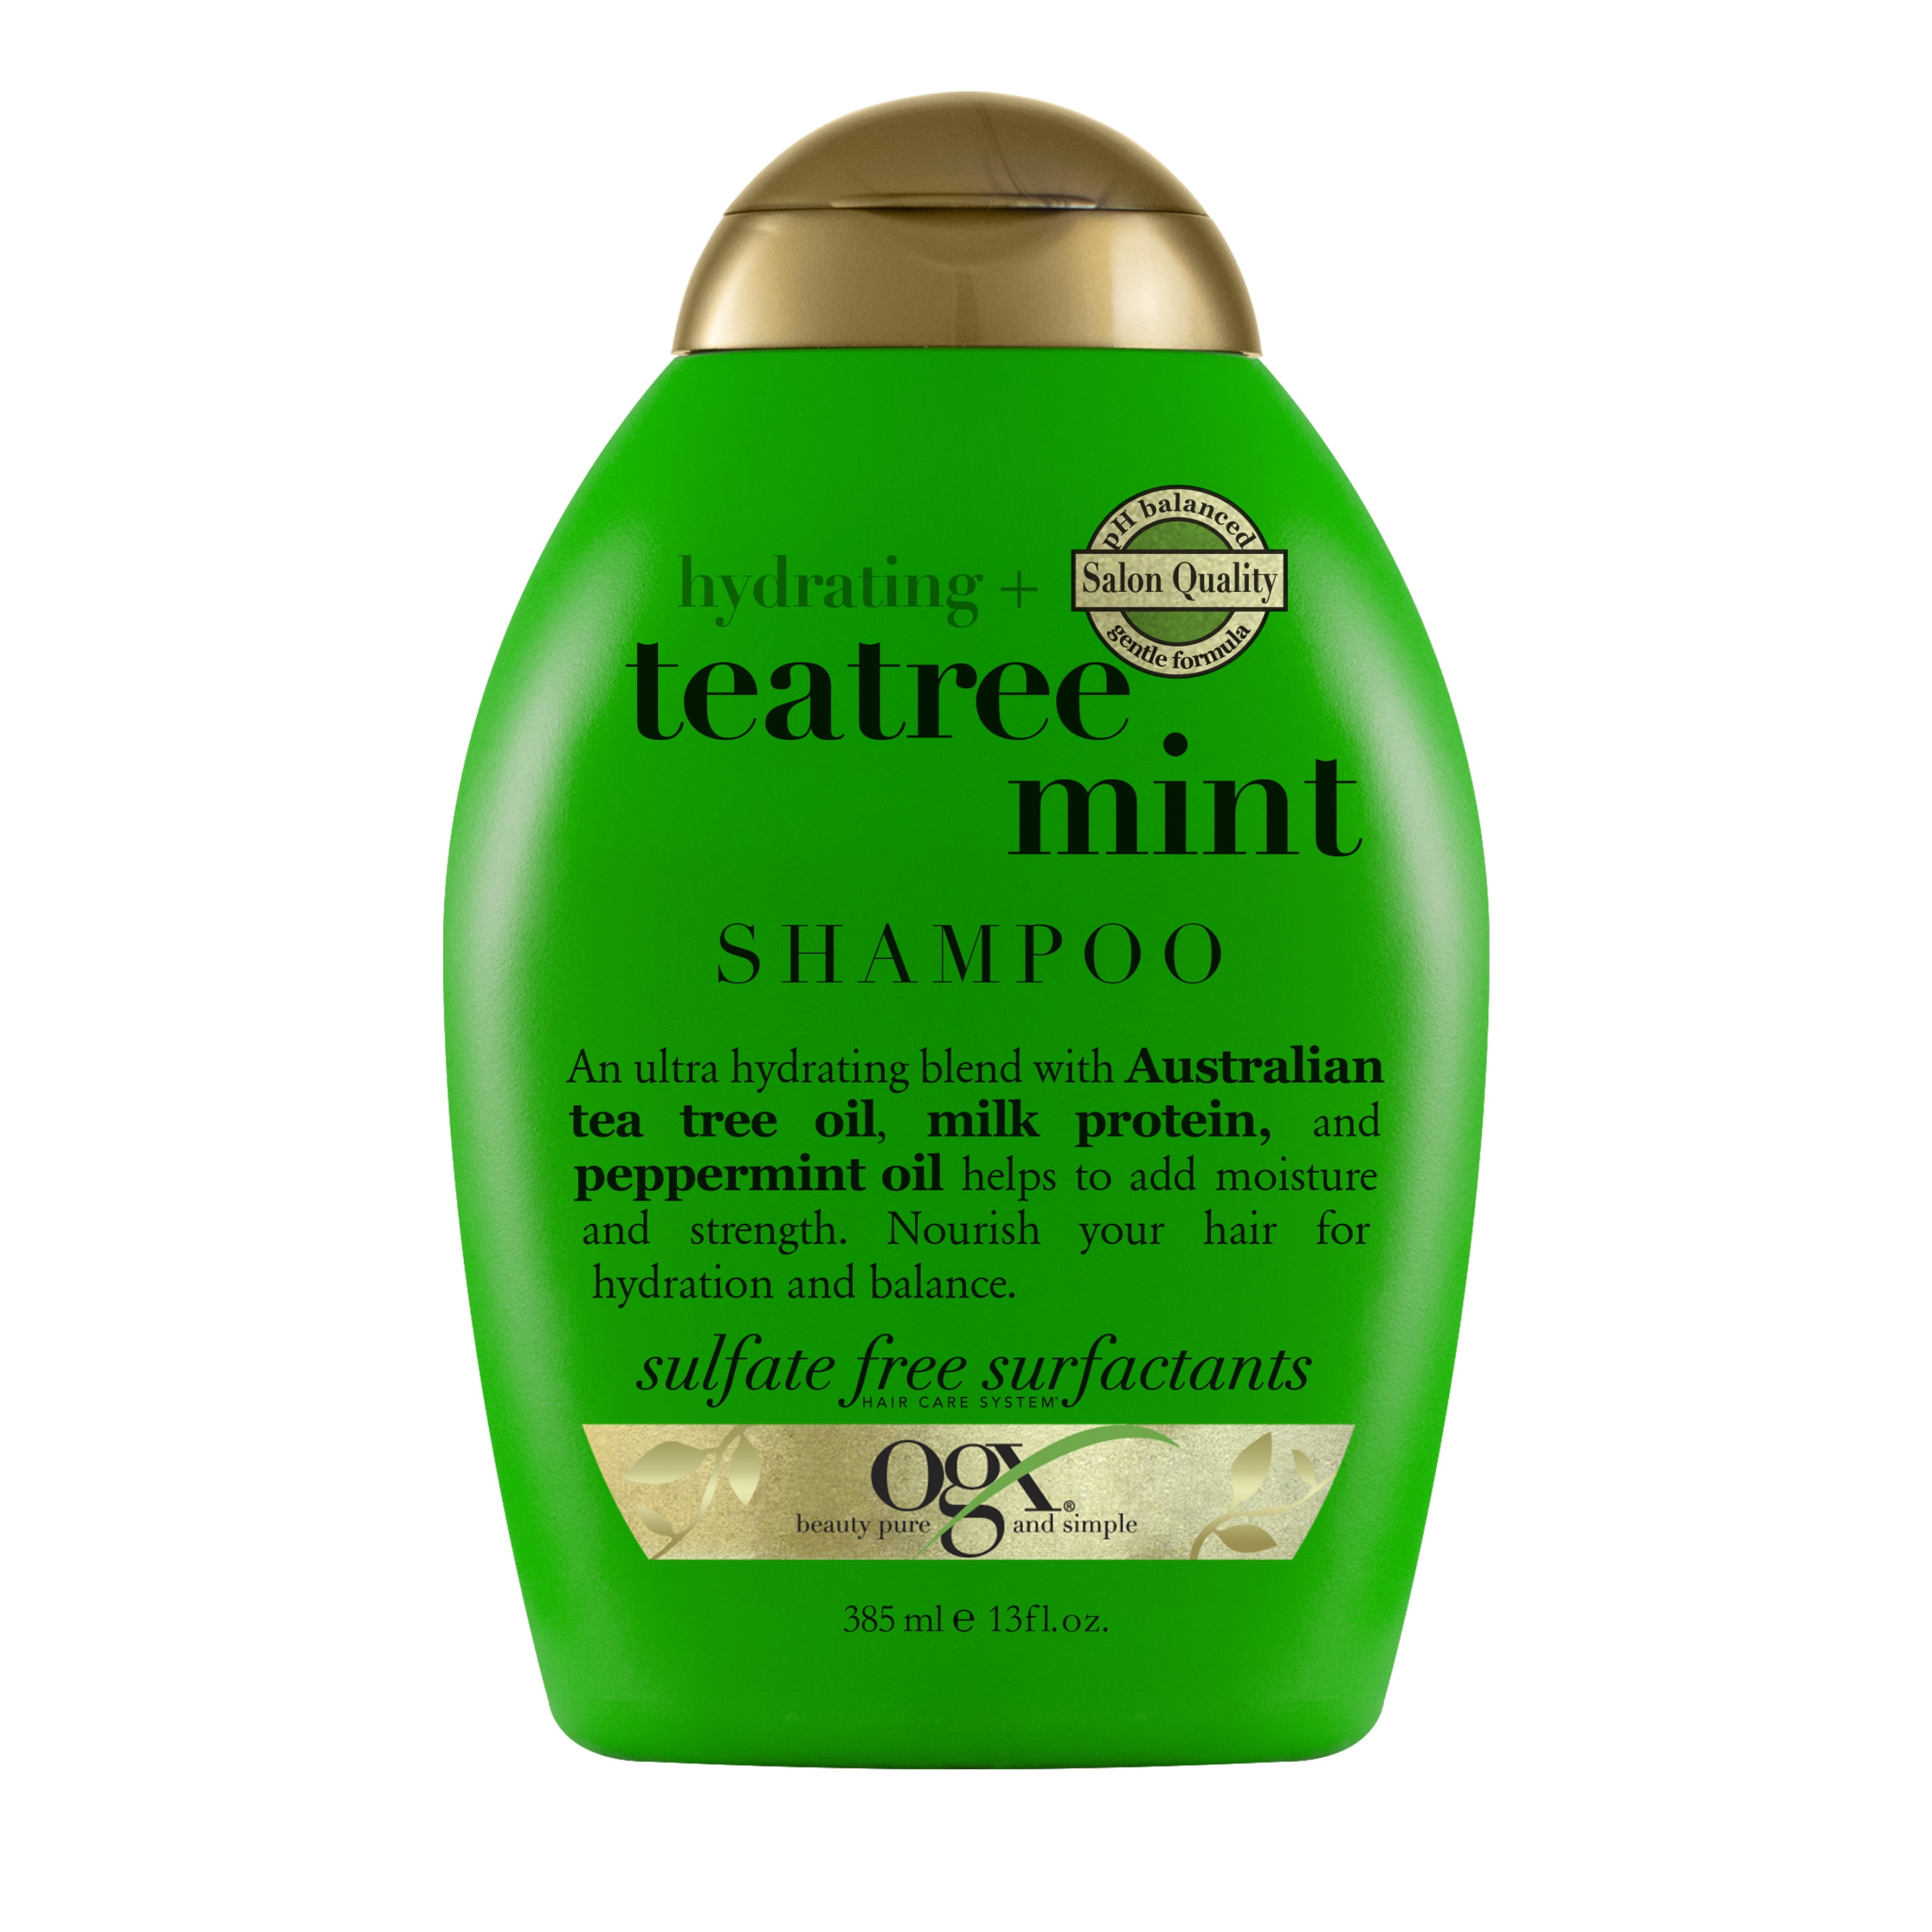 fotografering hvordan man bruger tilbede OGX Hydrating + Tea Tree Mint Nourishing & Invigorating Daily Shampoo with  Peppermint Oil & Milk Proteins, 13 fl oz - Walmart.com